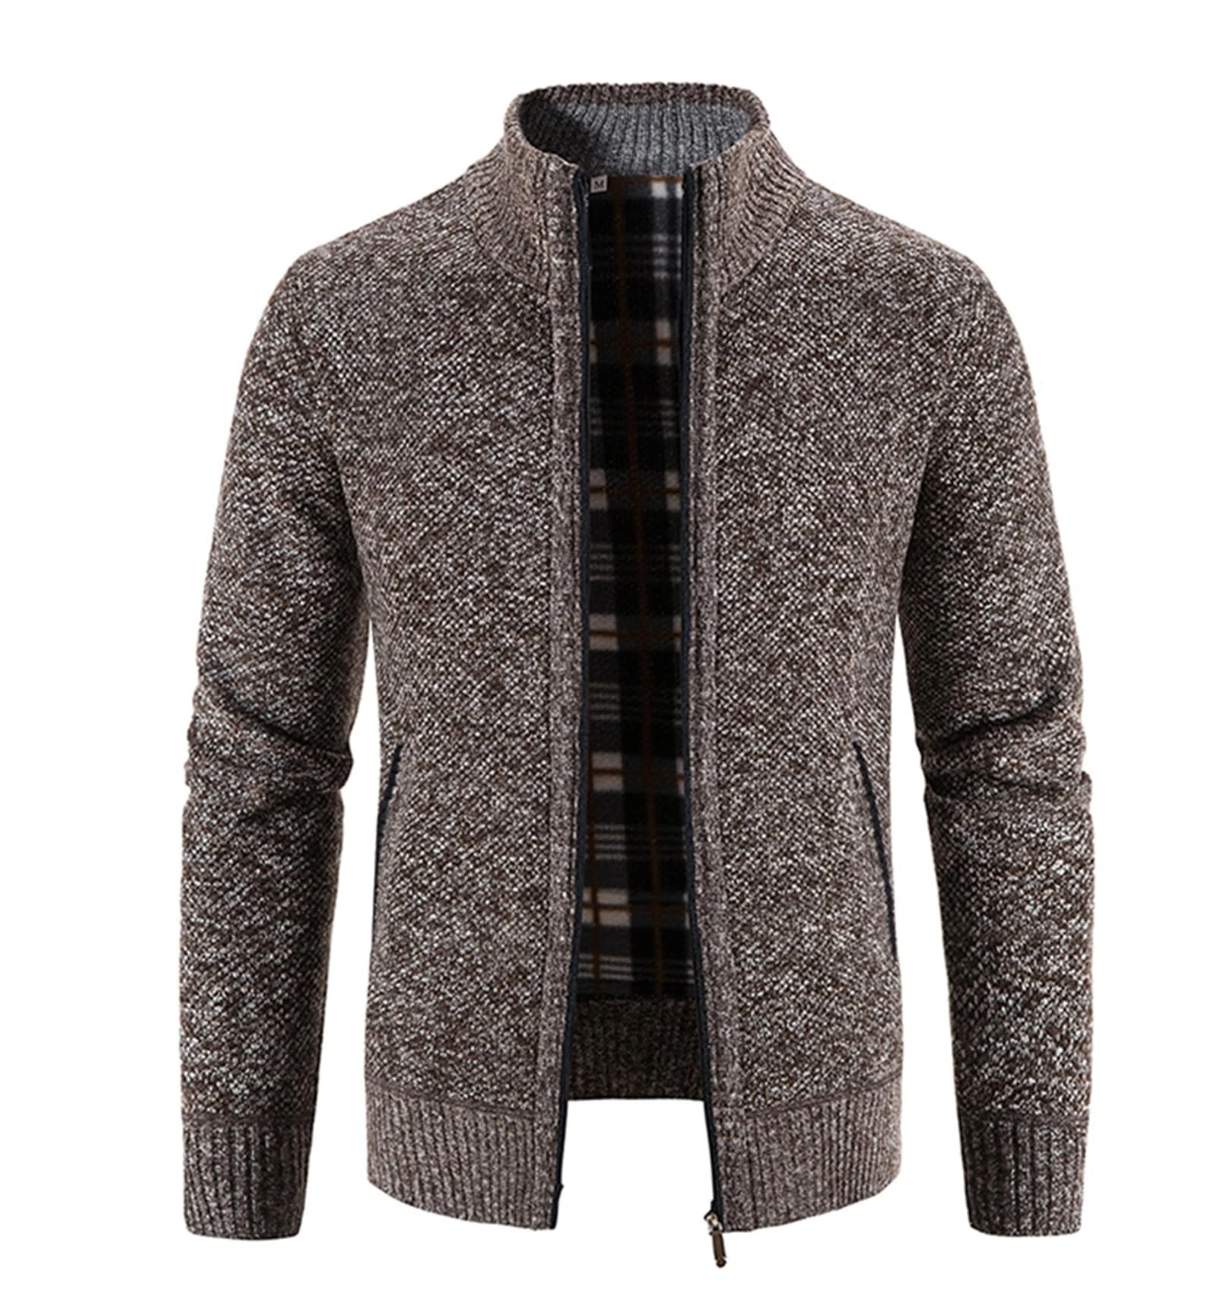 Stylish Sophistication: NITAGUT Men's Zip Up Jacket with Striking Contrast Plaid Lining